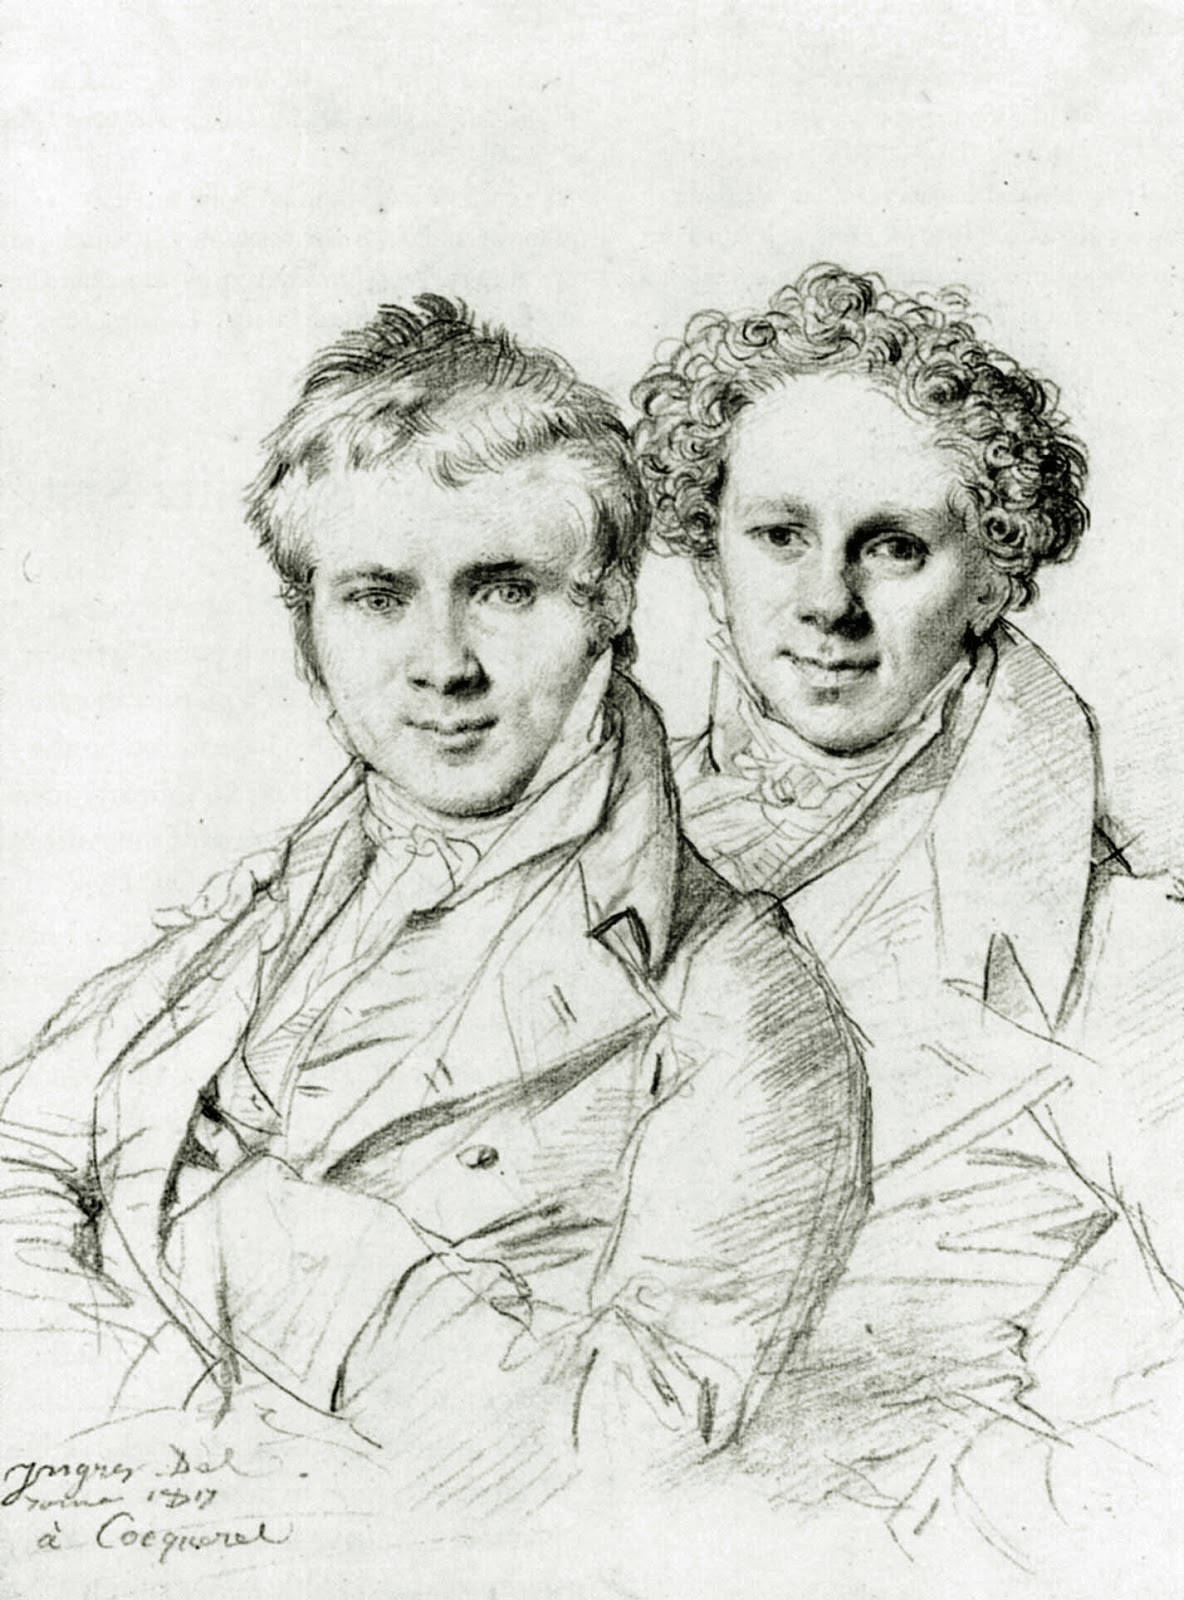 Jean+Auguste+Dominique+Ingres-1780-1867 (183).jpg